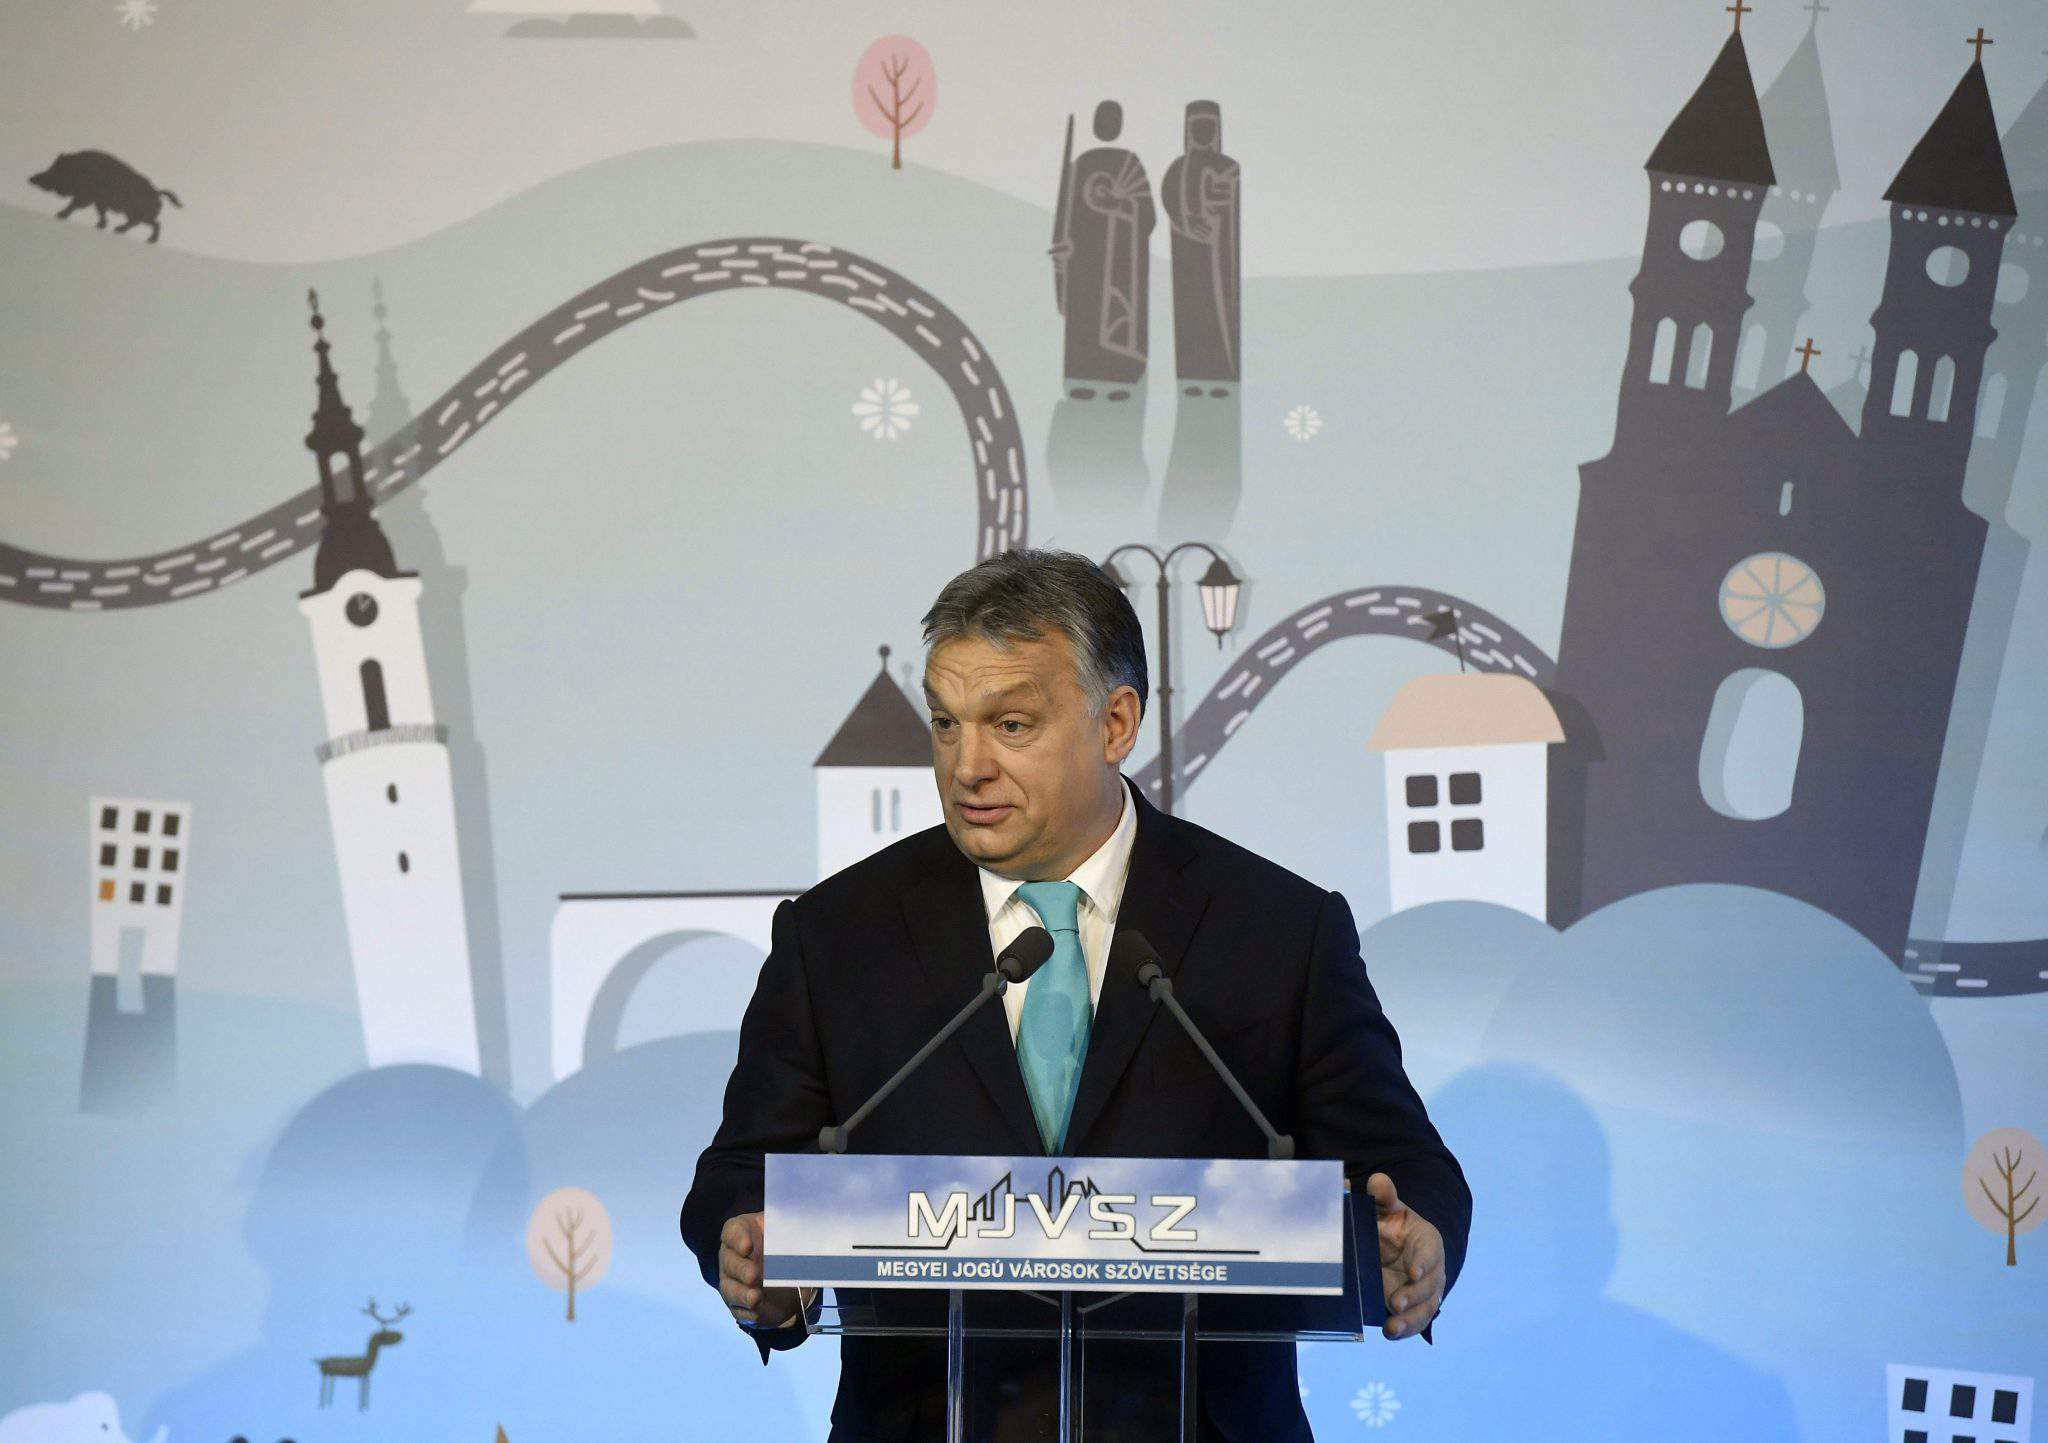 viktor orbán parle Veszprém premier ministre